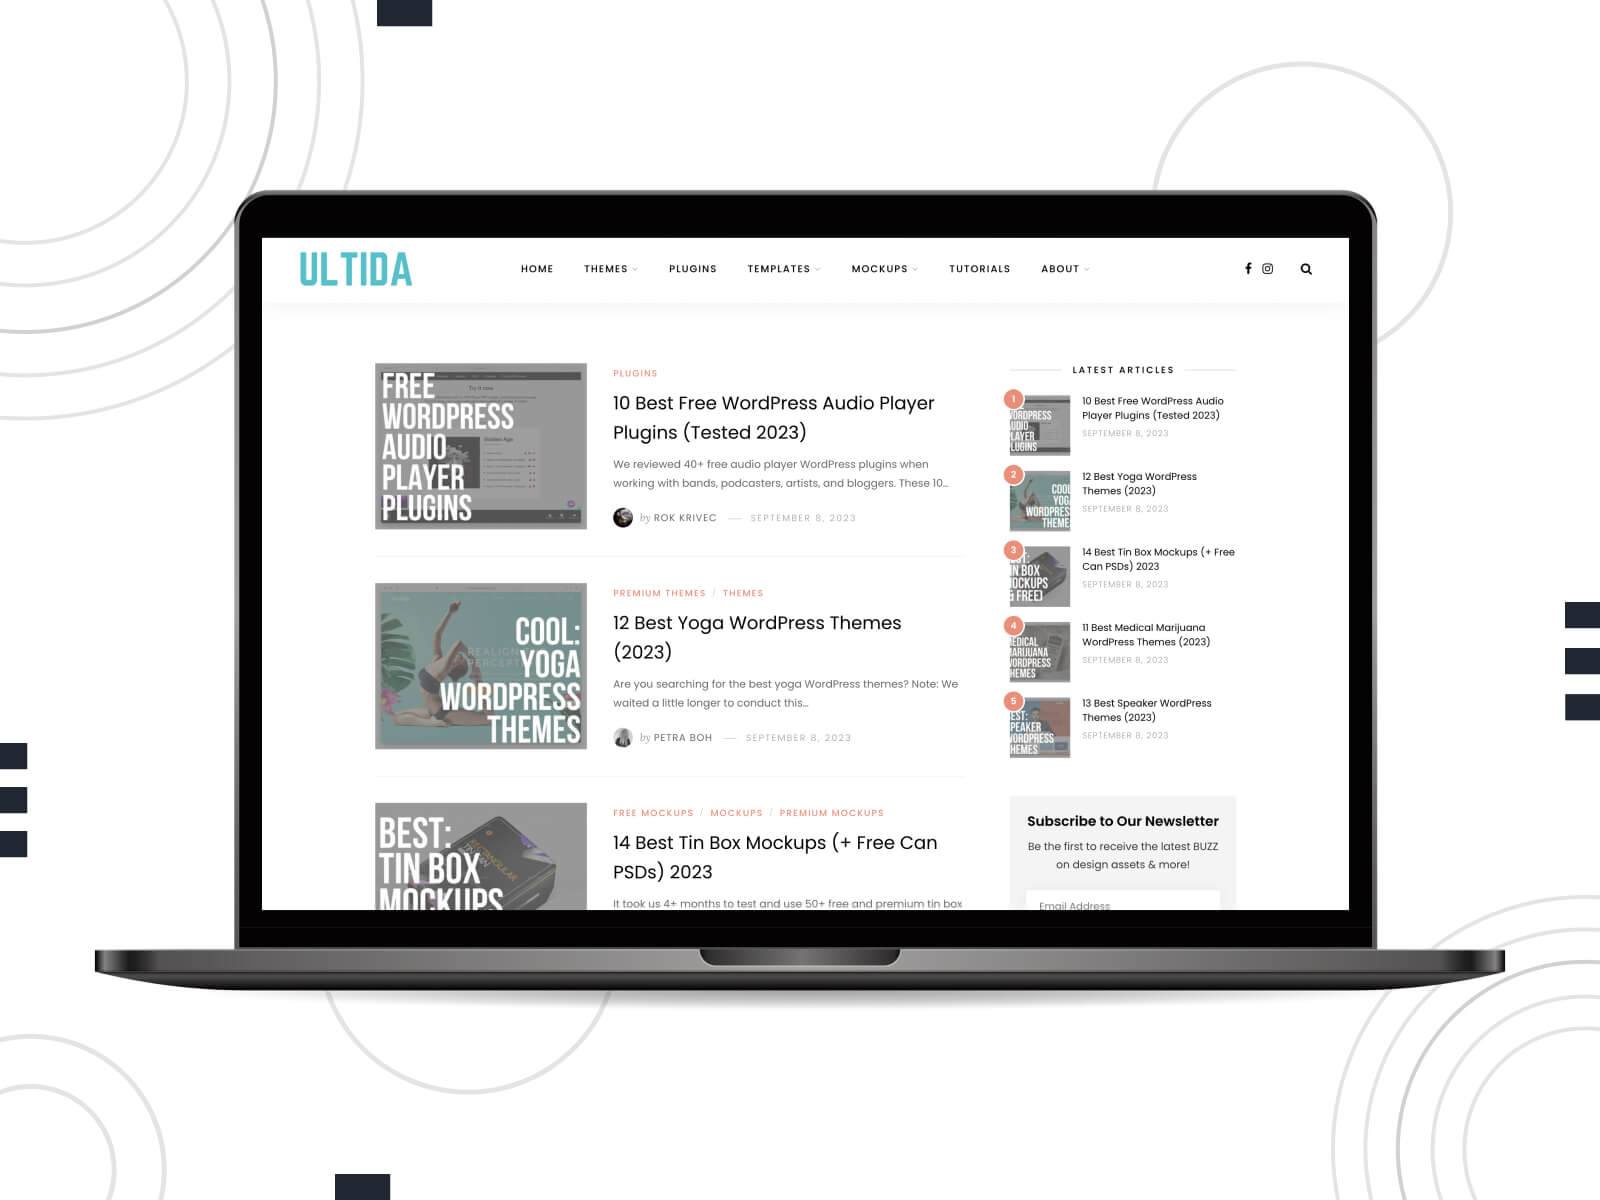 Picture of Ultida - WordPress resource every developer should bookmark.